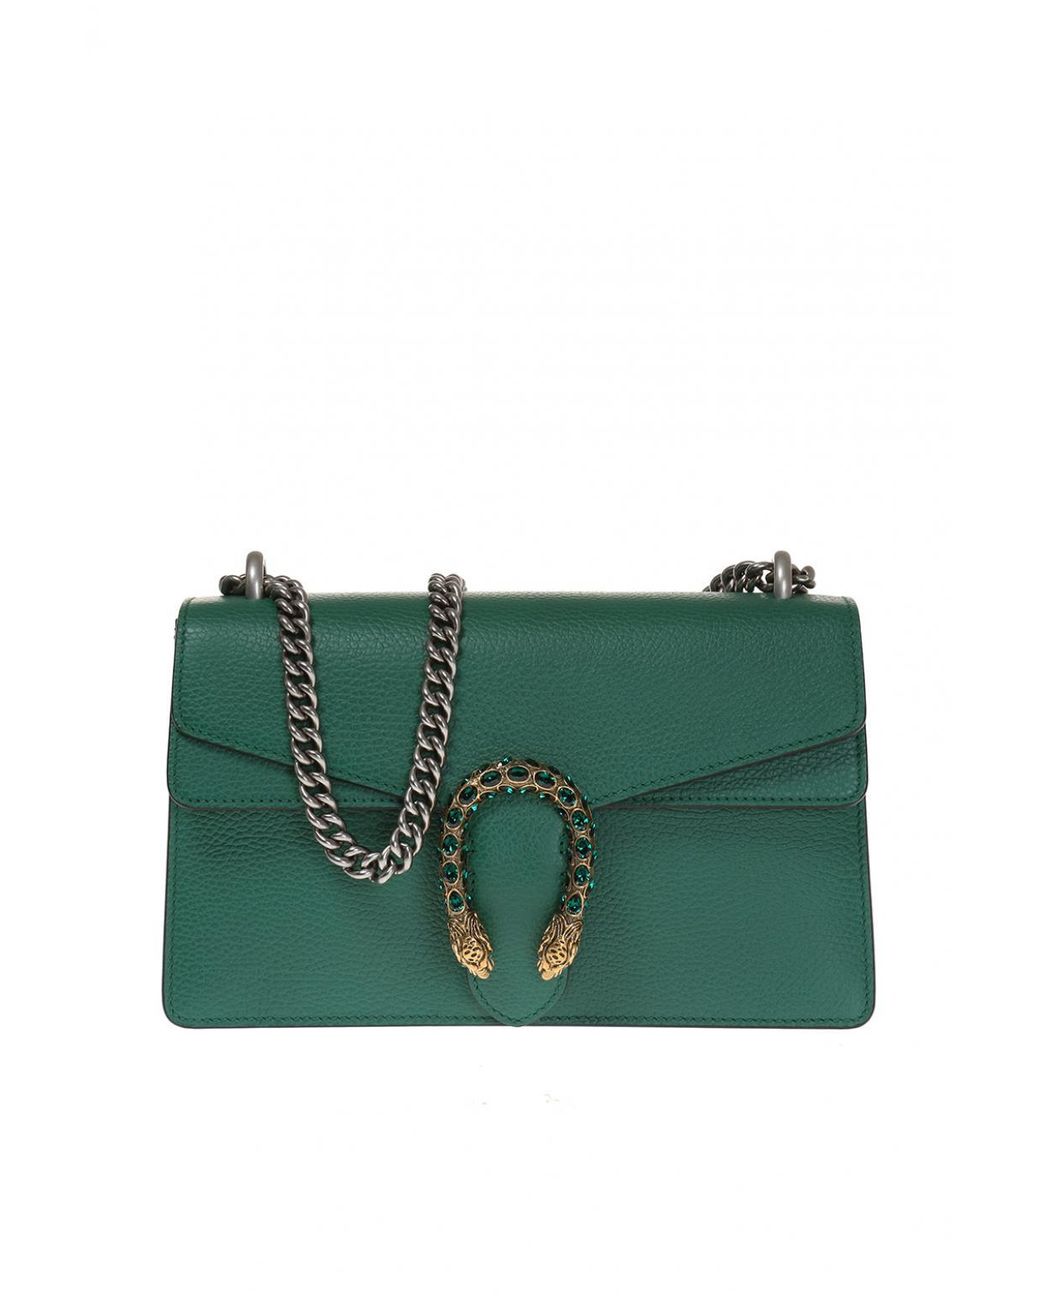 Gucci 'dionysus' Shoulder Bag in Green | Lyst